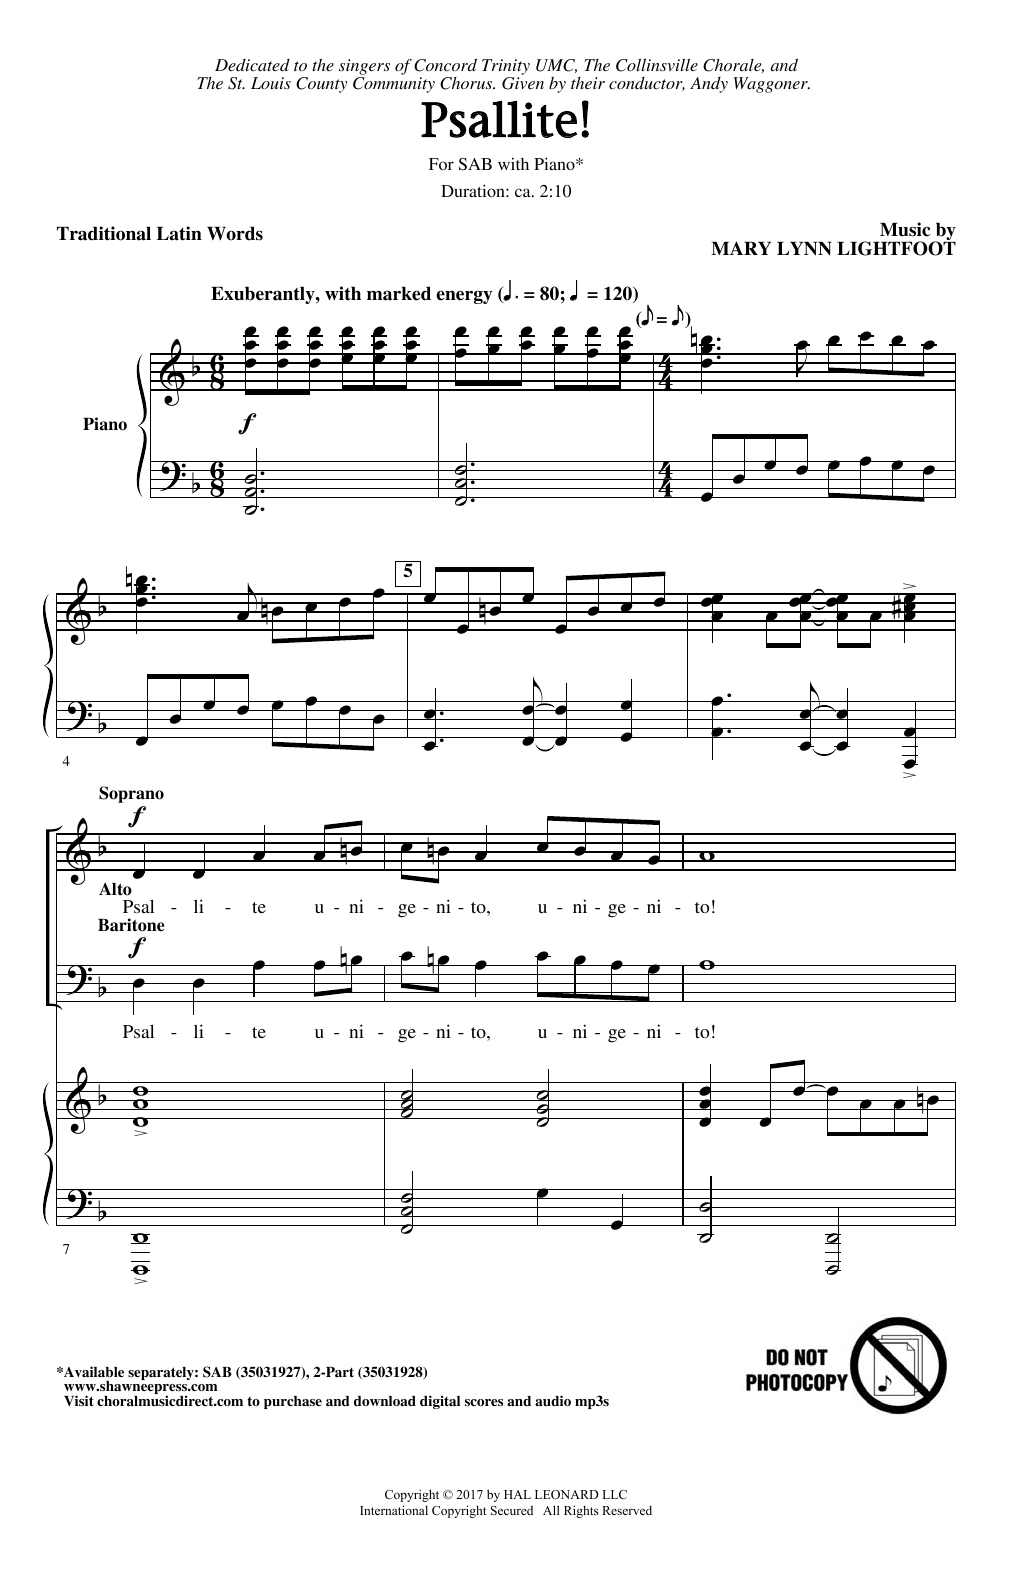 Mary Lynn Lightfoot Psallite! sheet music notes and chords arranged for 2-Part Choir